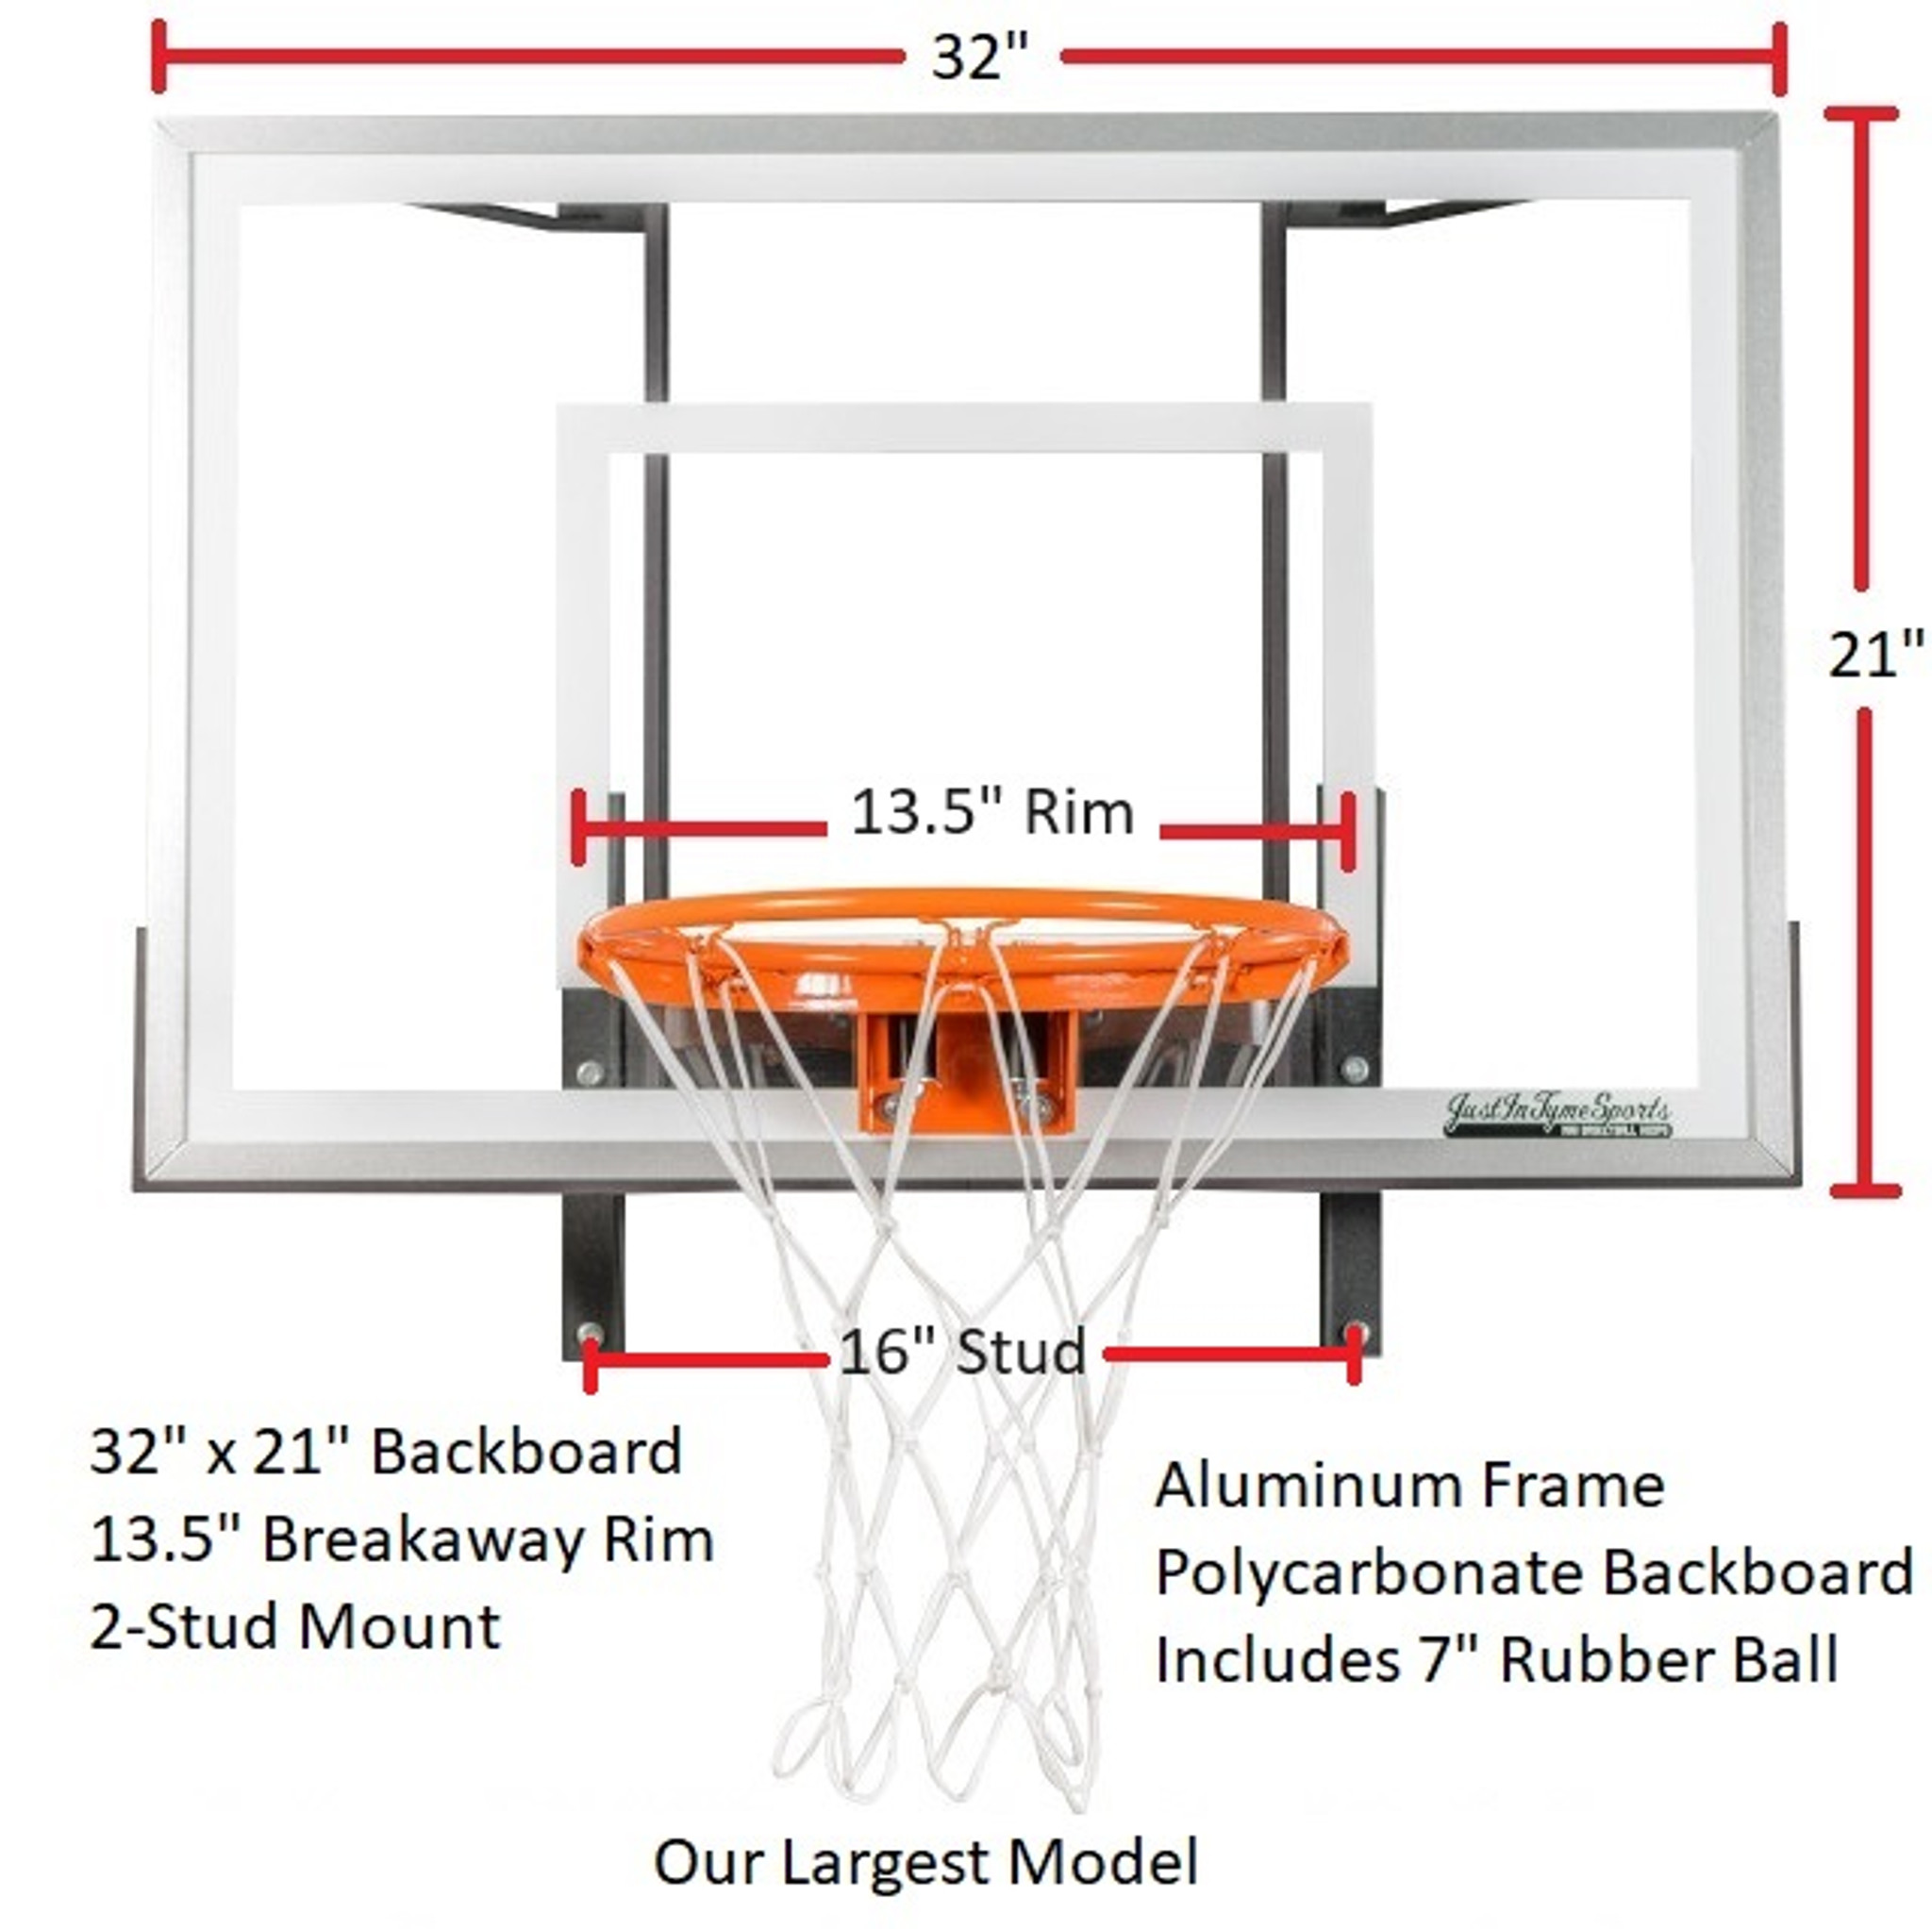 6 Mini Pro Rubber Basketball